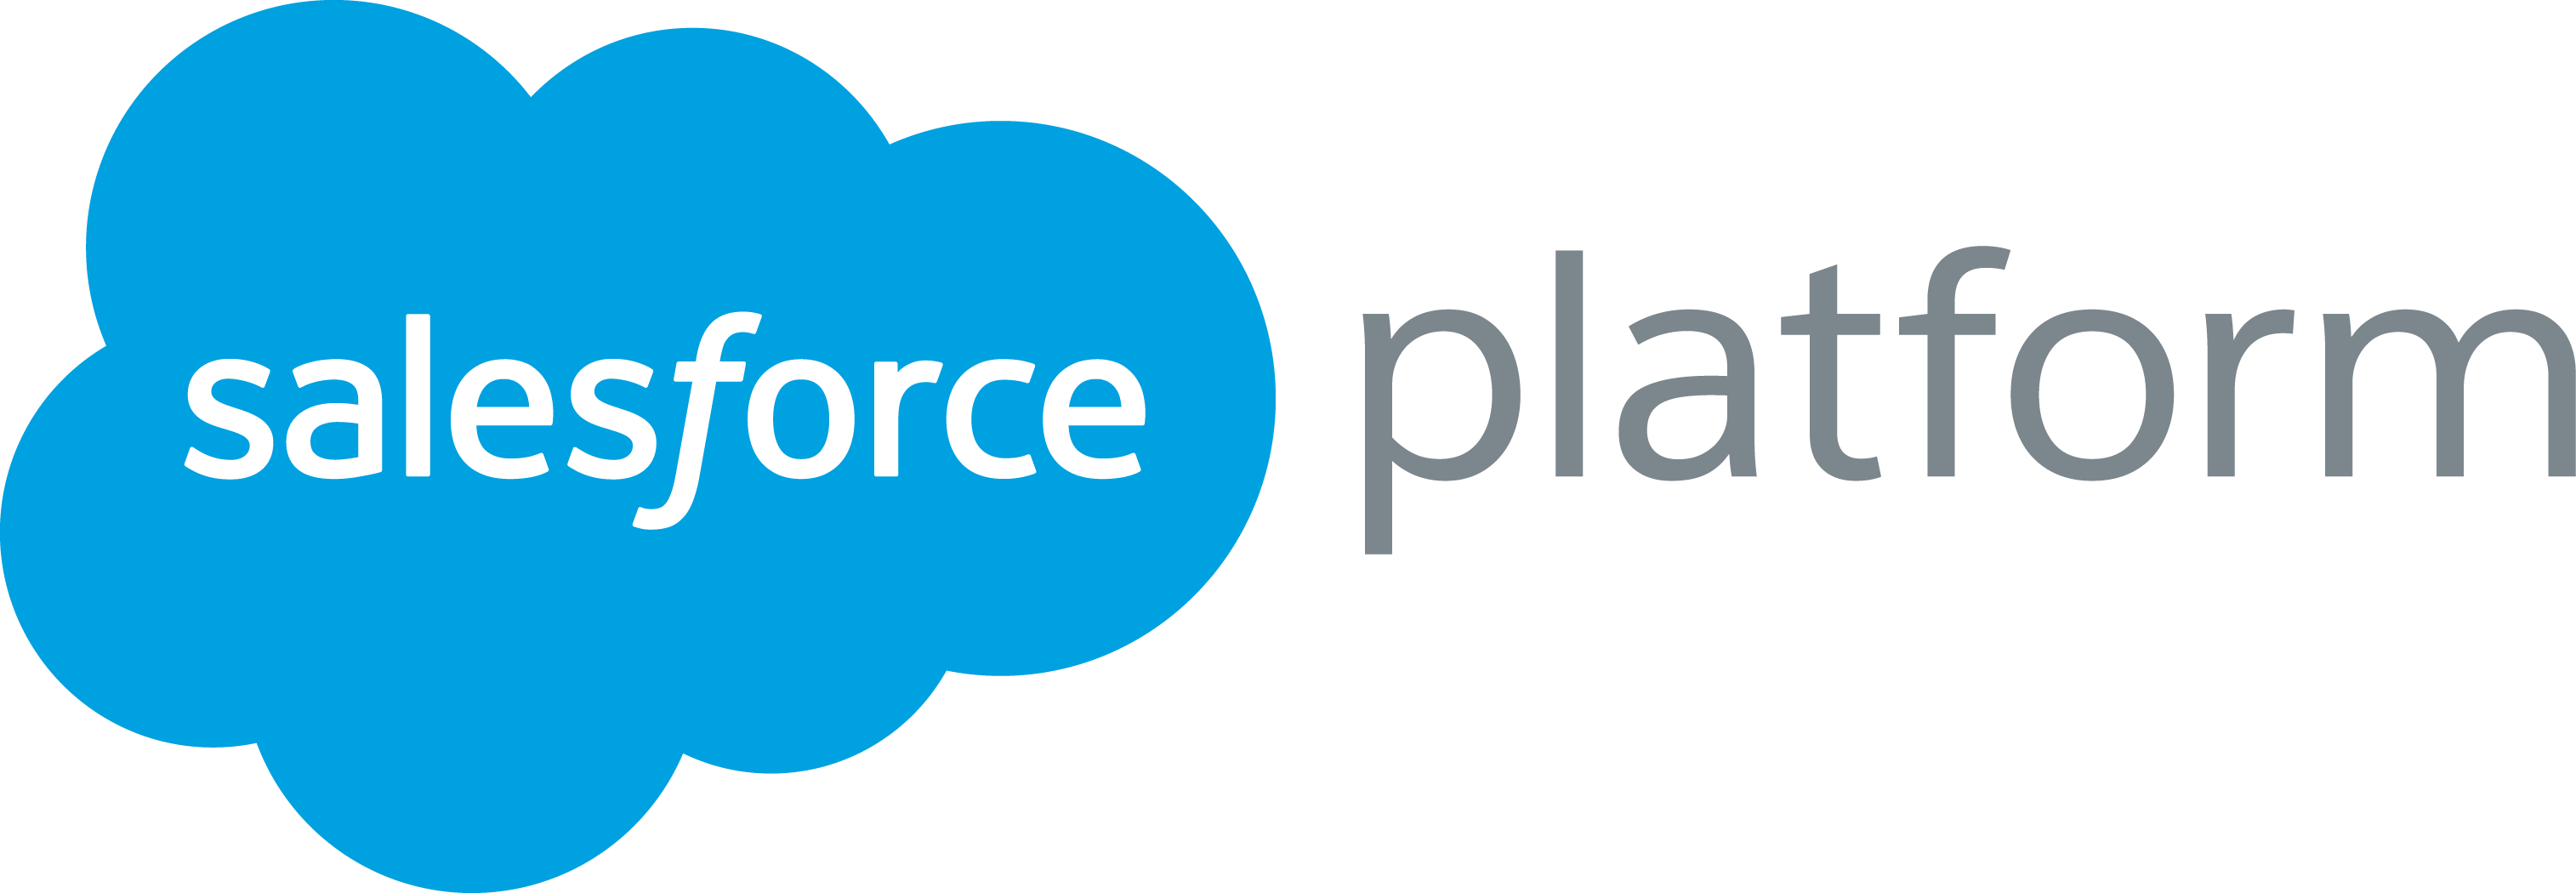 Salesforce Chatter Logo - Salesforce_Platform